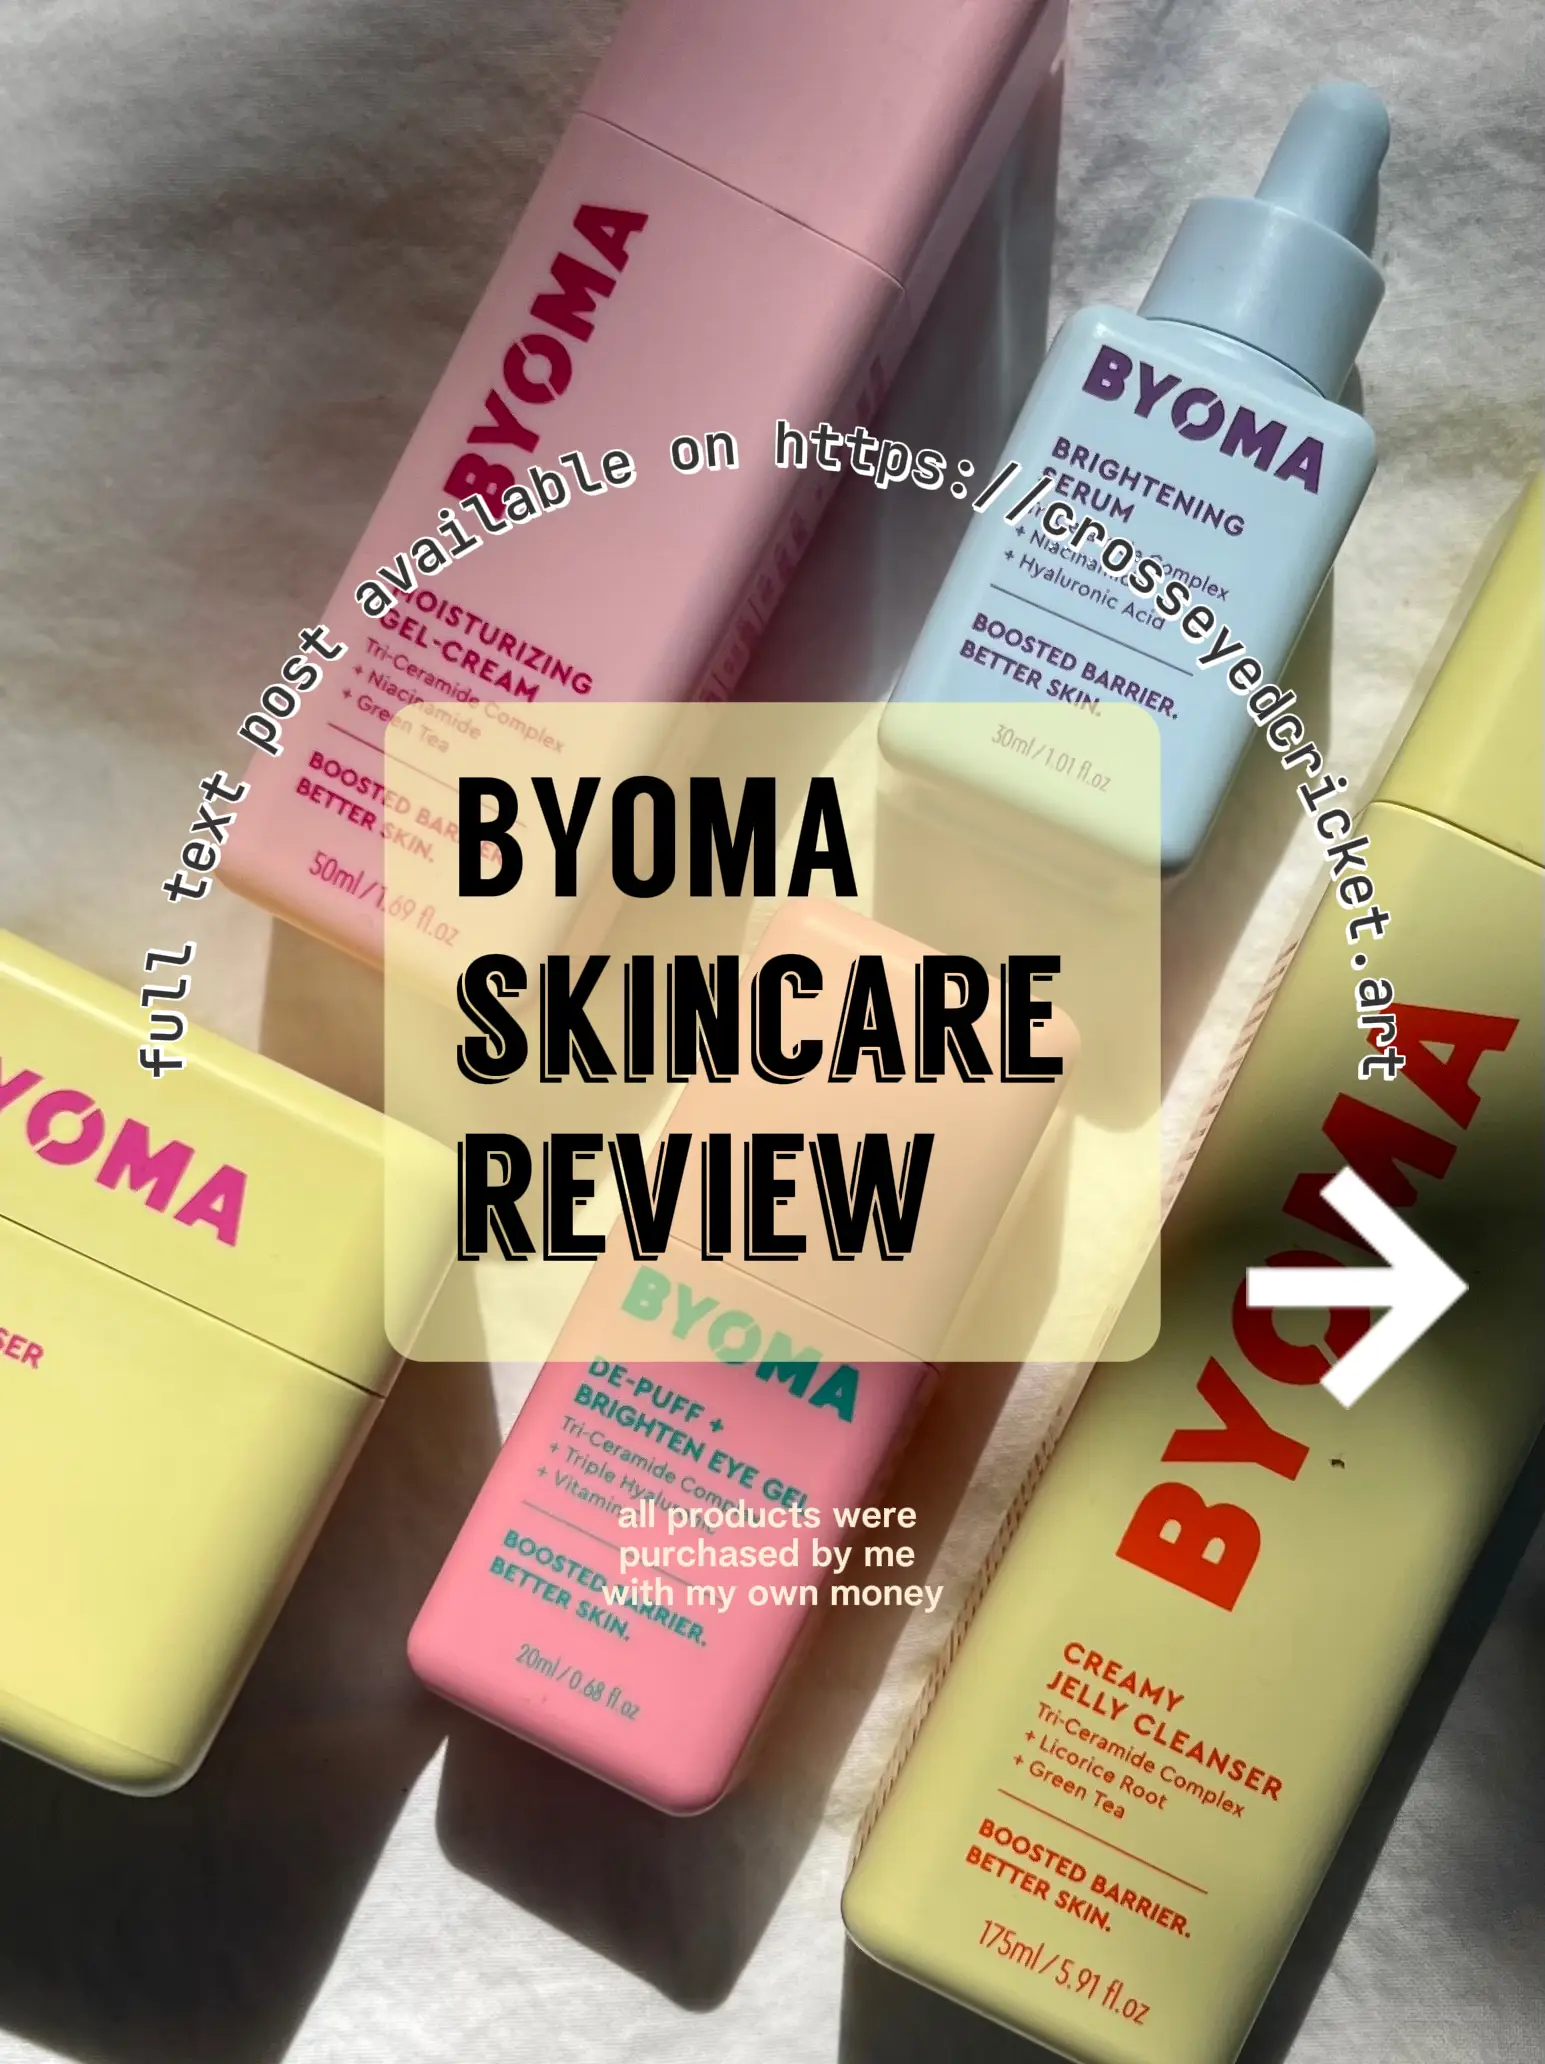 Introducing BYOMA's brand new De-Puff + Brighten Eye Gel! ✨ Made